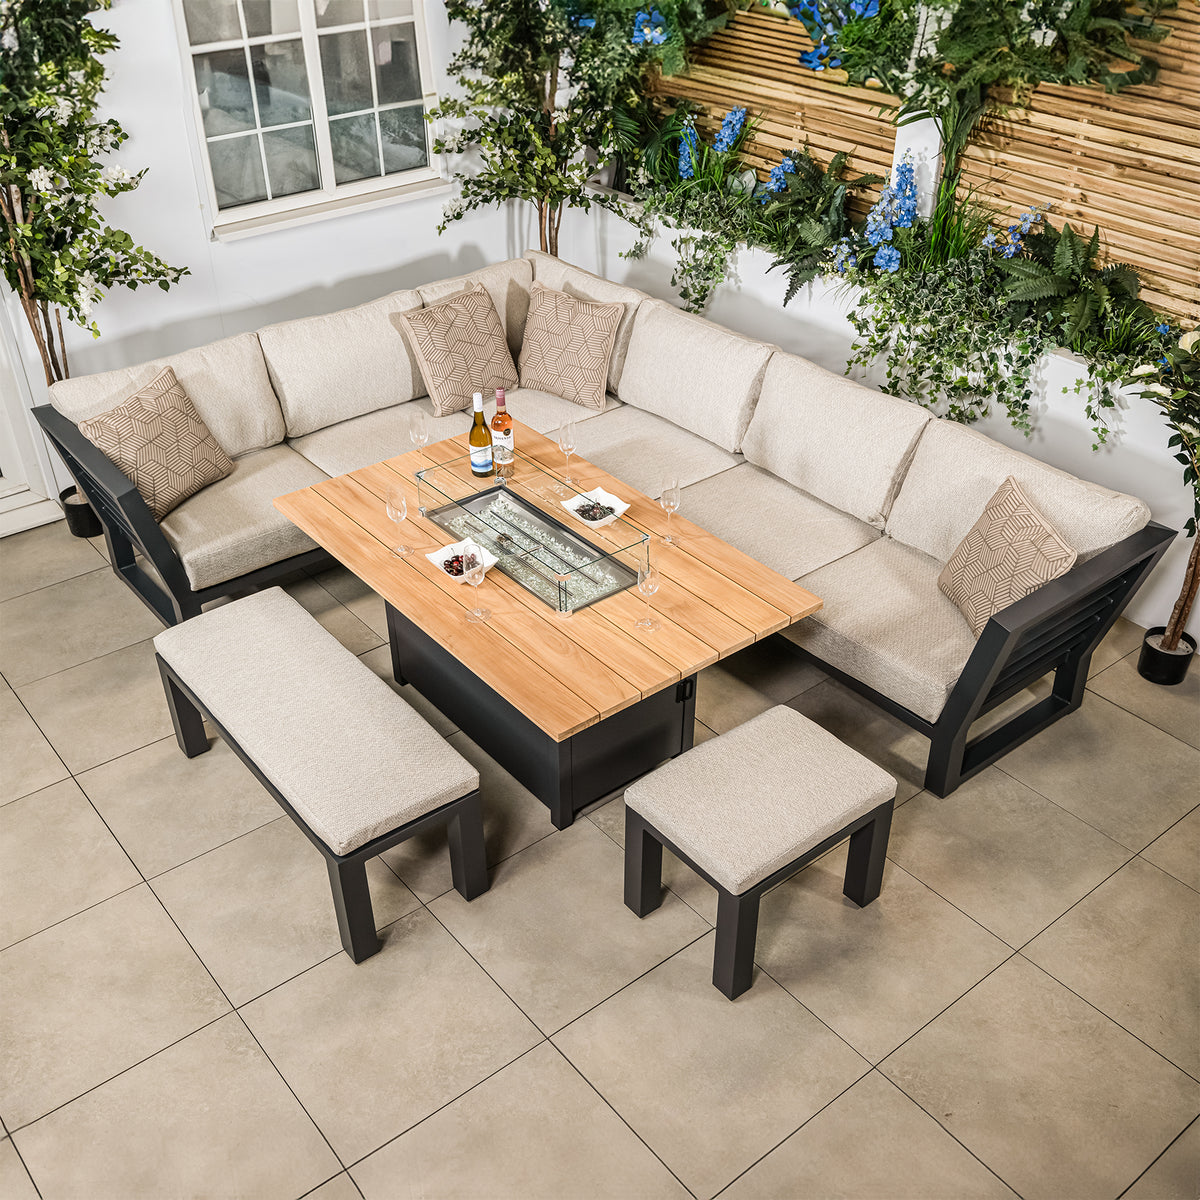 Bracken Outdoors Seattle Aluminium Lounge Corner Garden Furniture Set with Fire Pit Table